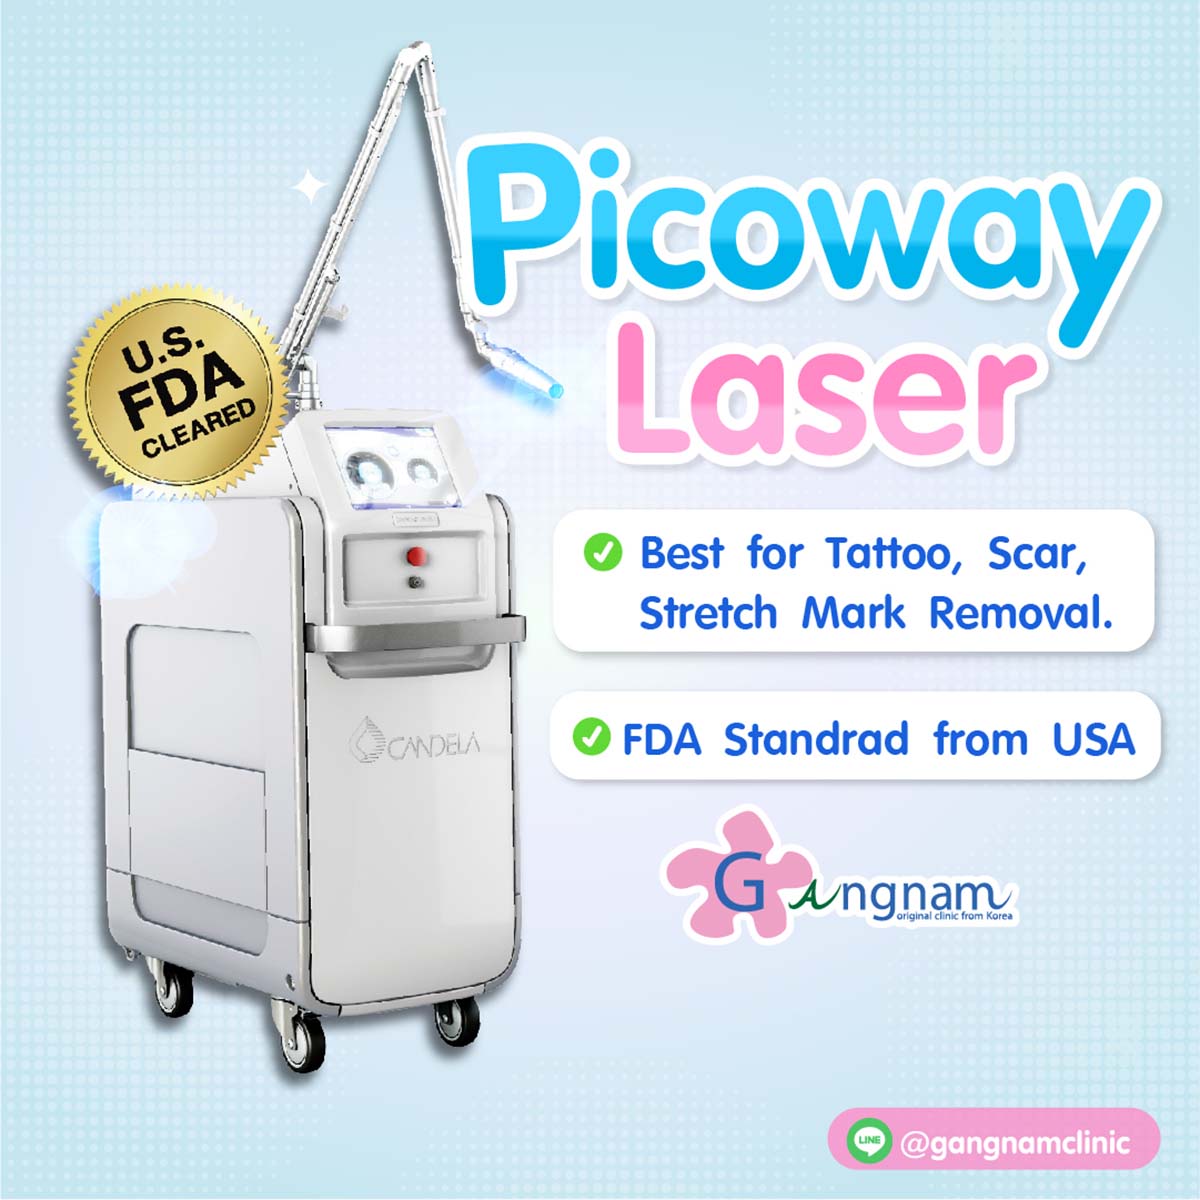 Piciway laser work